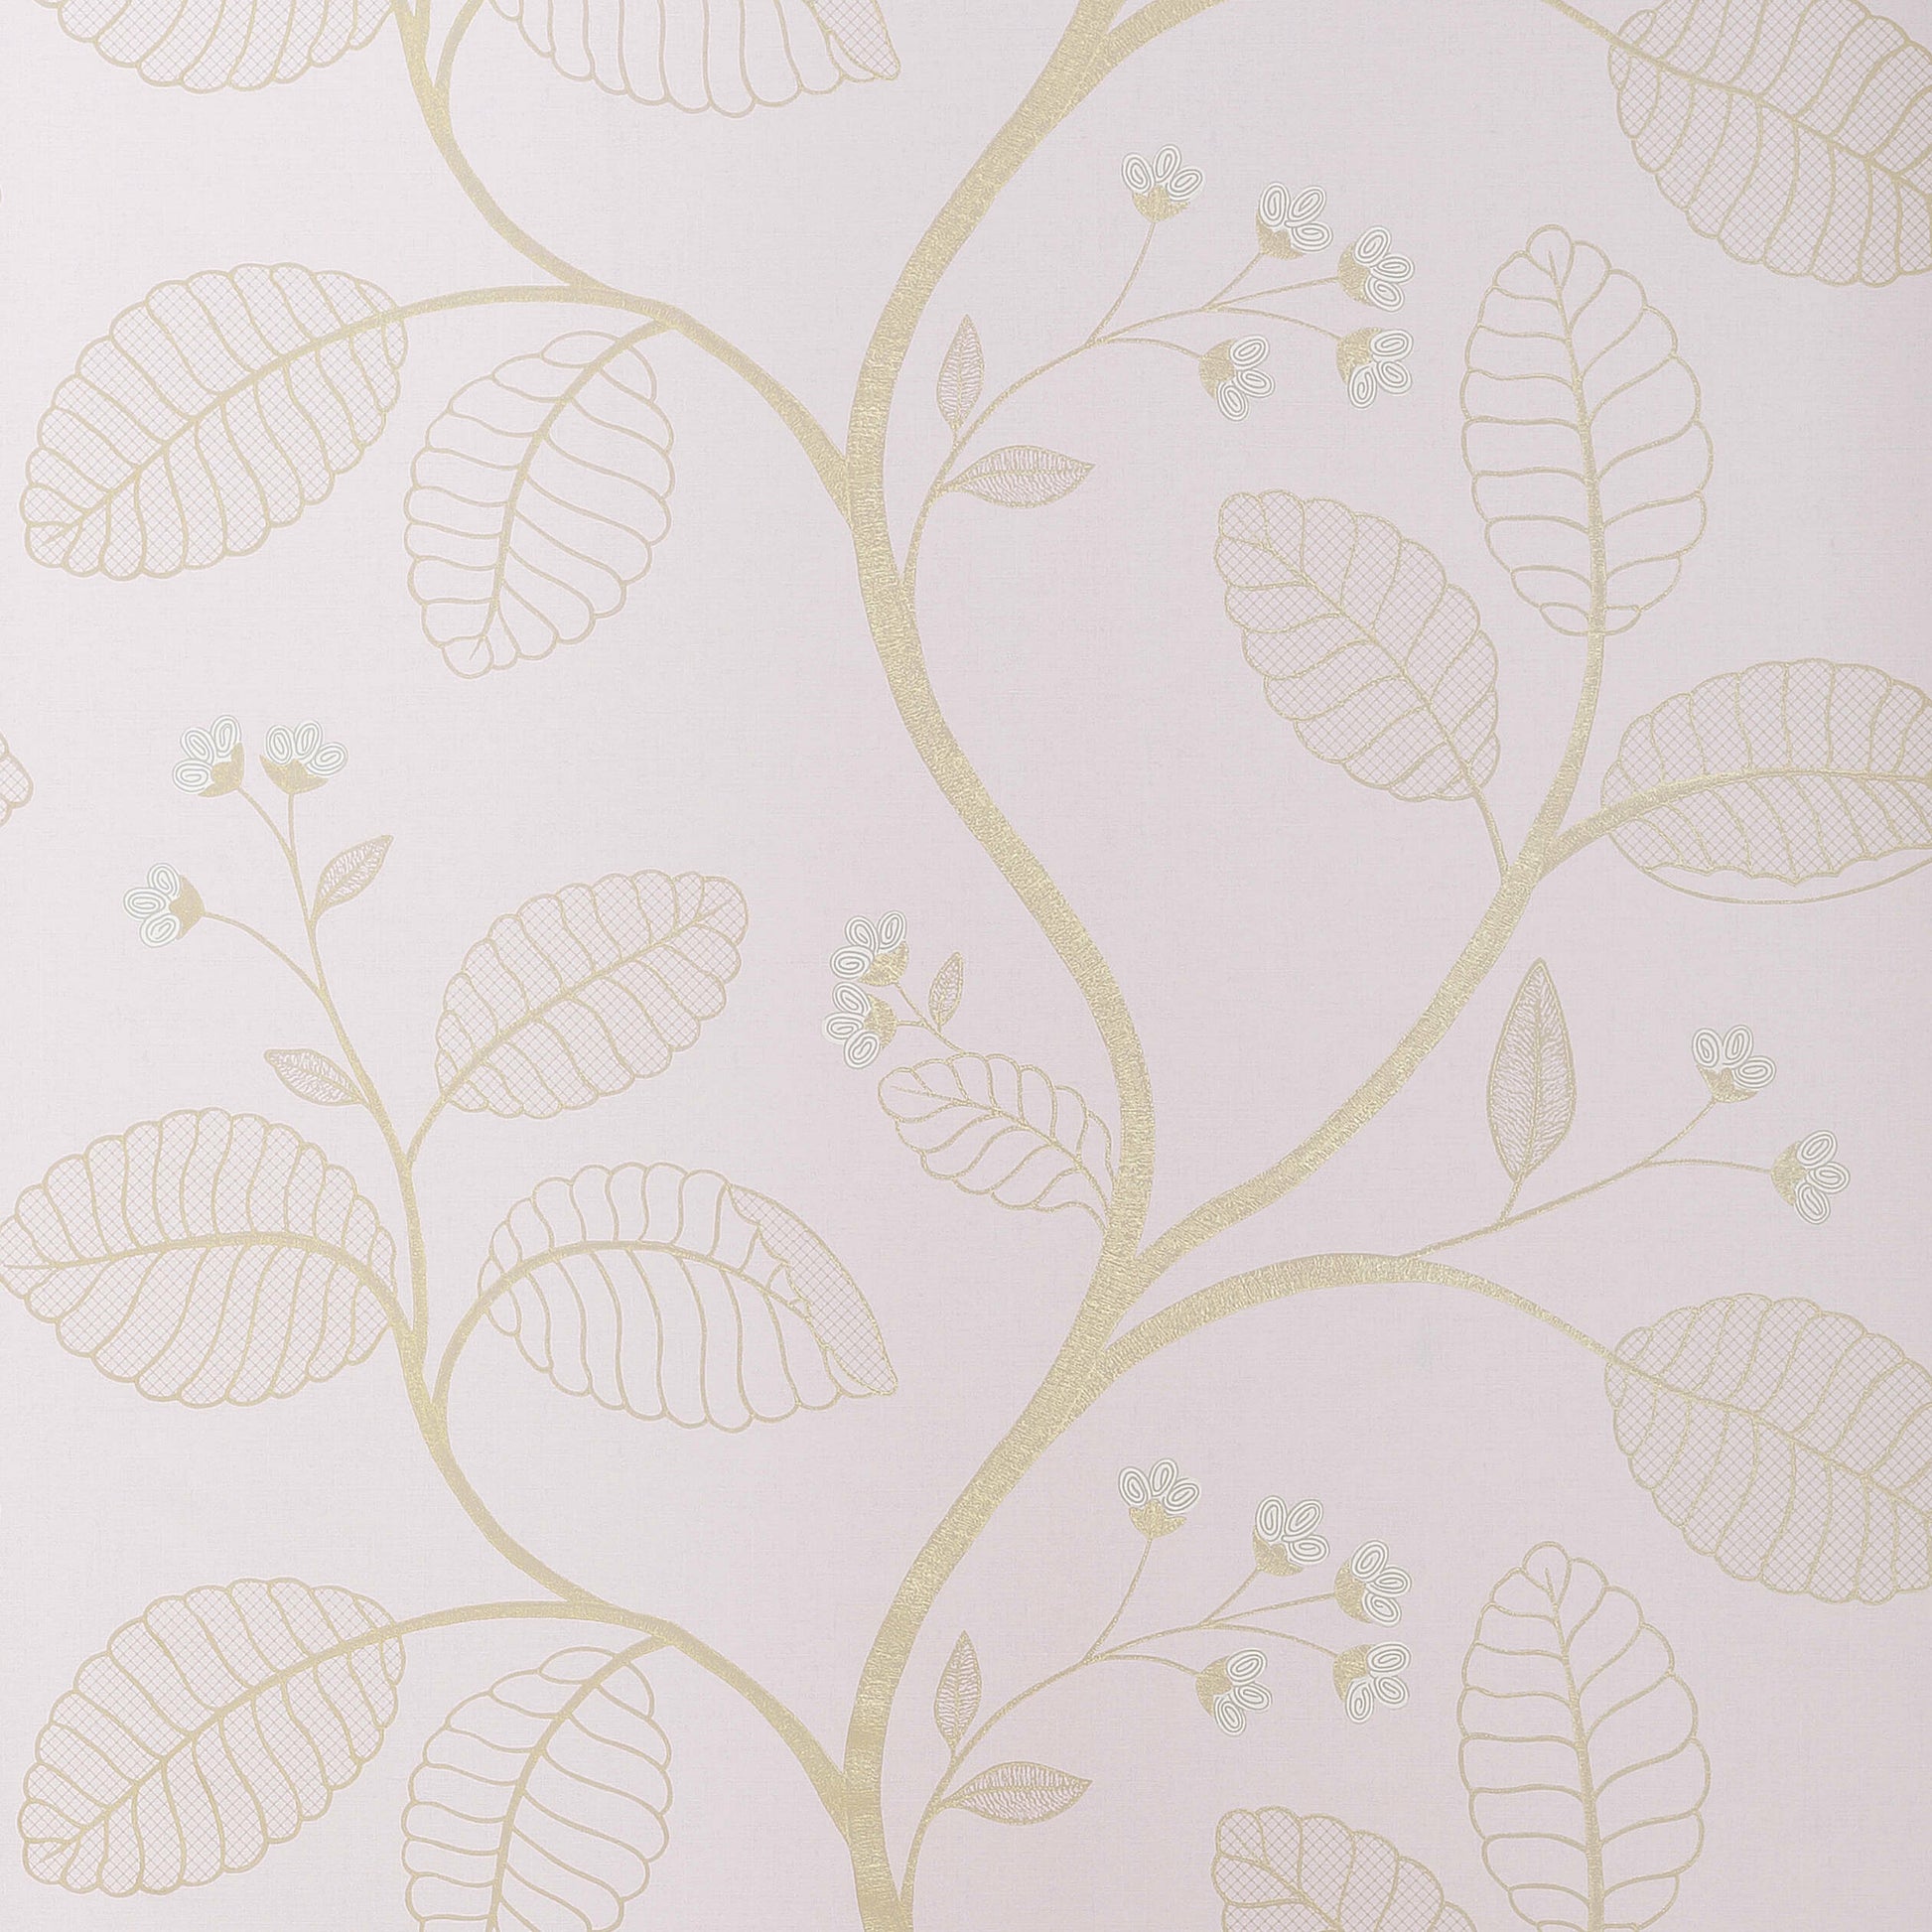 Purchase  Ann French Wallpaper Item# AT1418 pattern name  Celia Vine